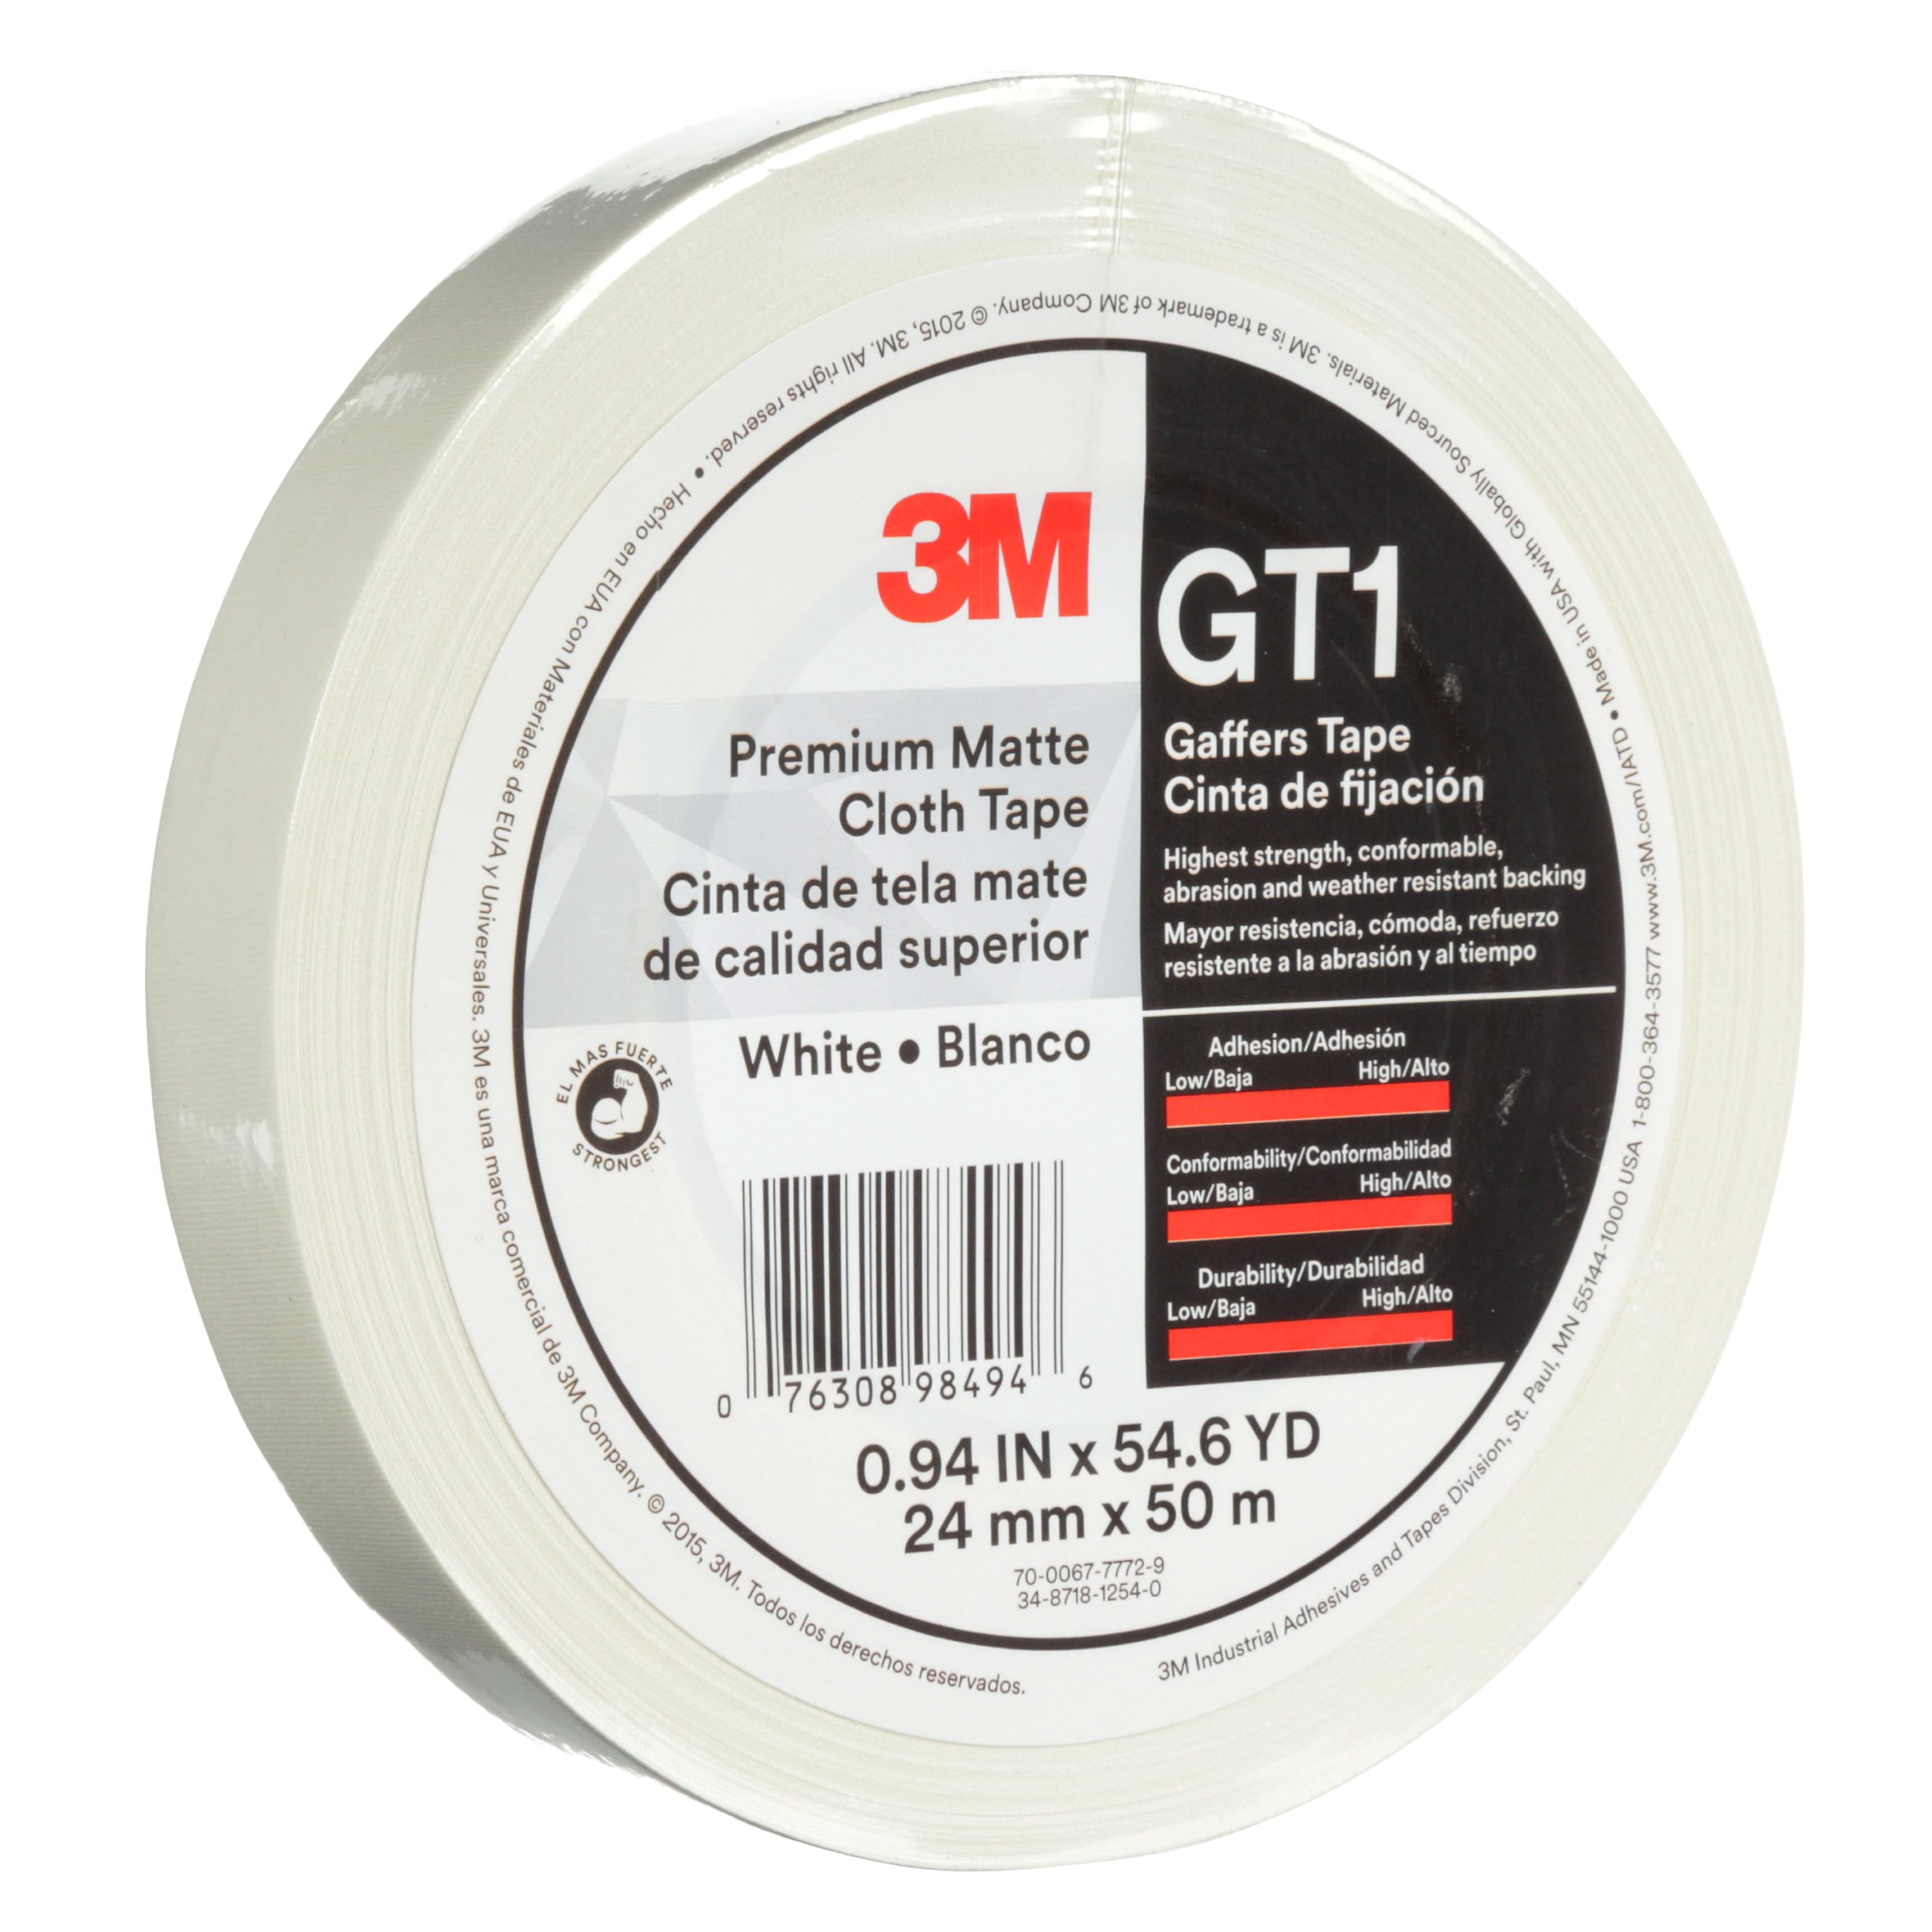 3M™ Premium Matte Cloth (Gaffers) Tape GT1, White, 24 mm x 50 m, 11 mil,
48 per case